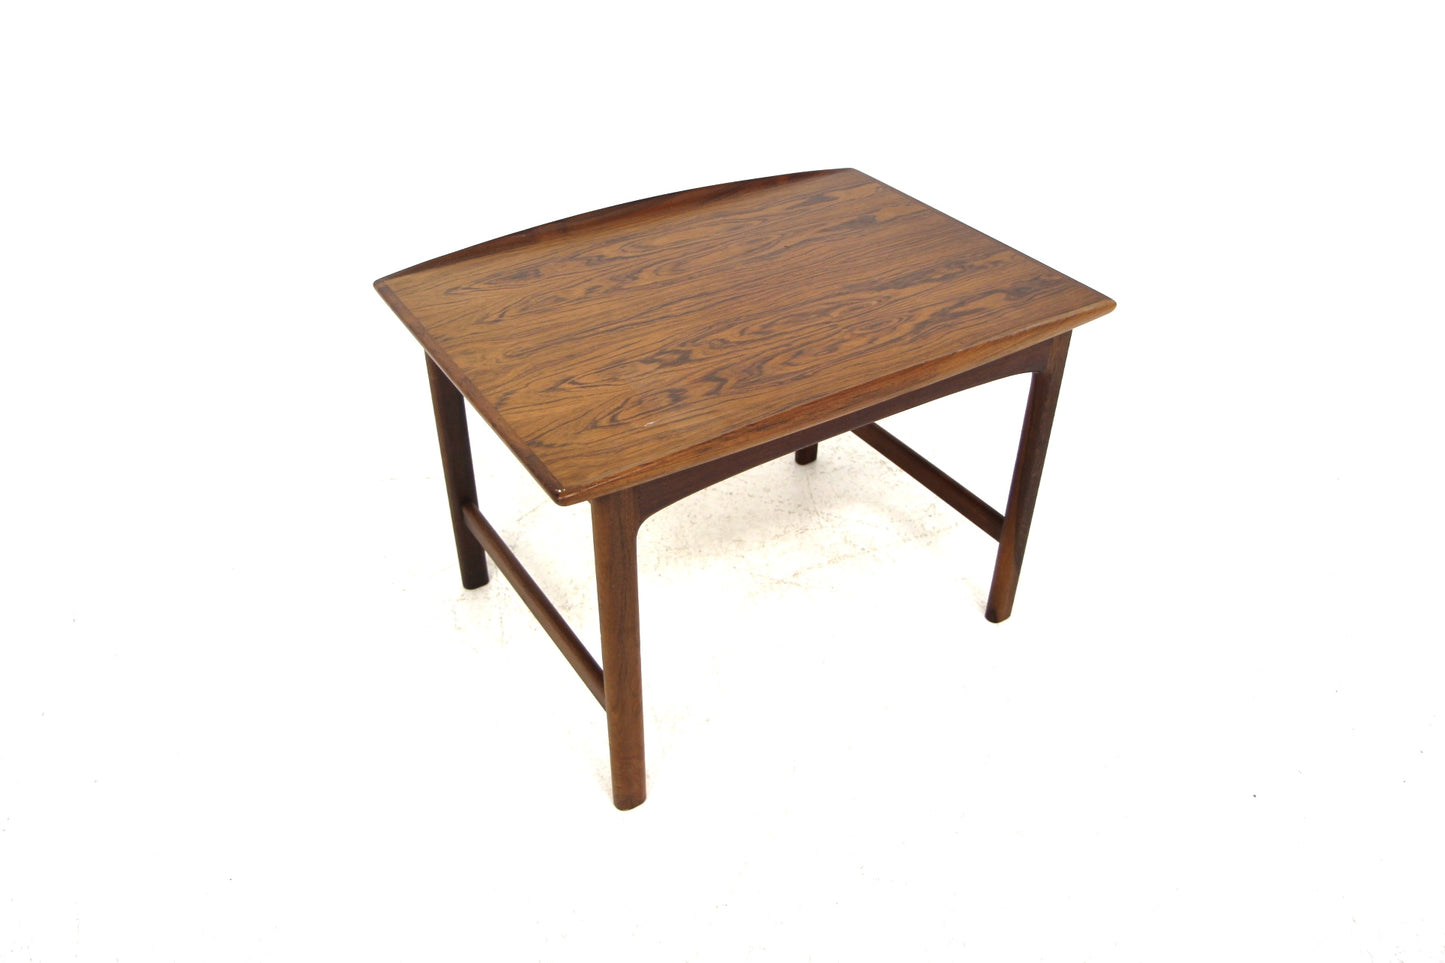 Tavolino "Frisco" Folke Ohlsson design svedese vintage anni 50 [sw22821]